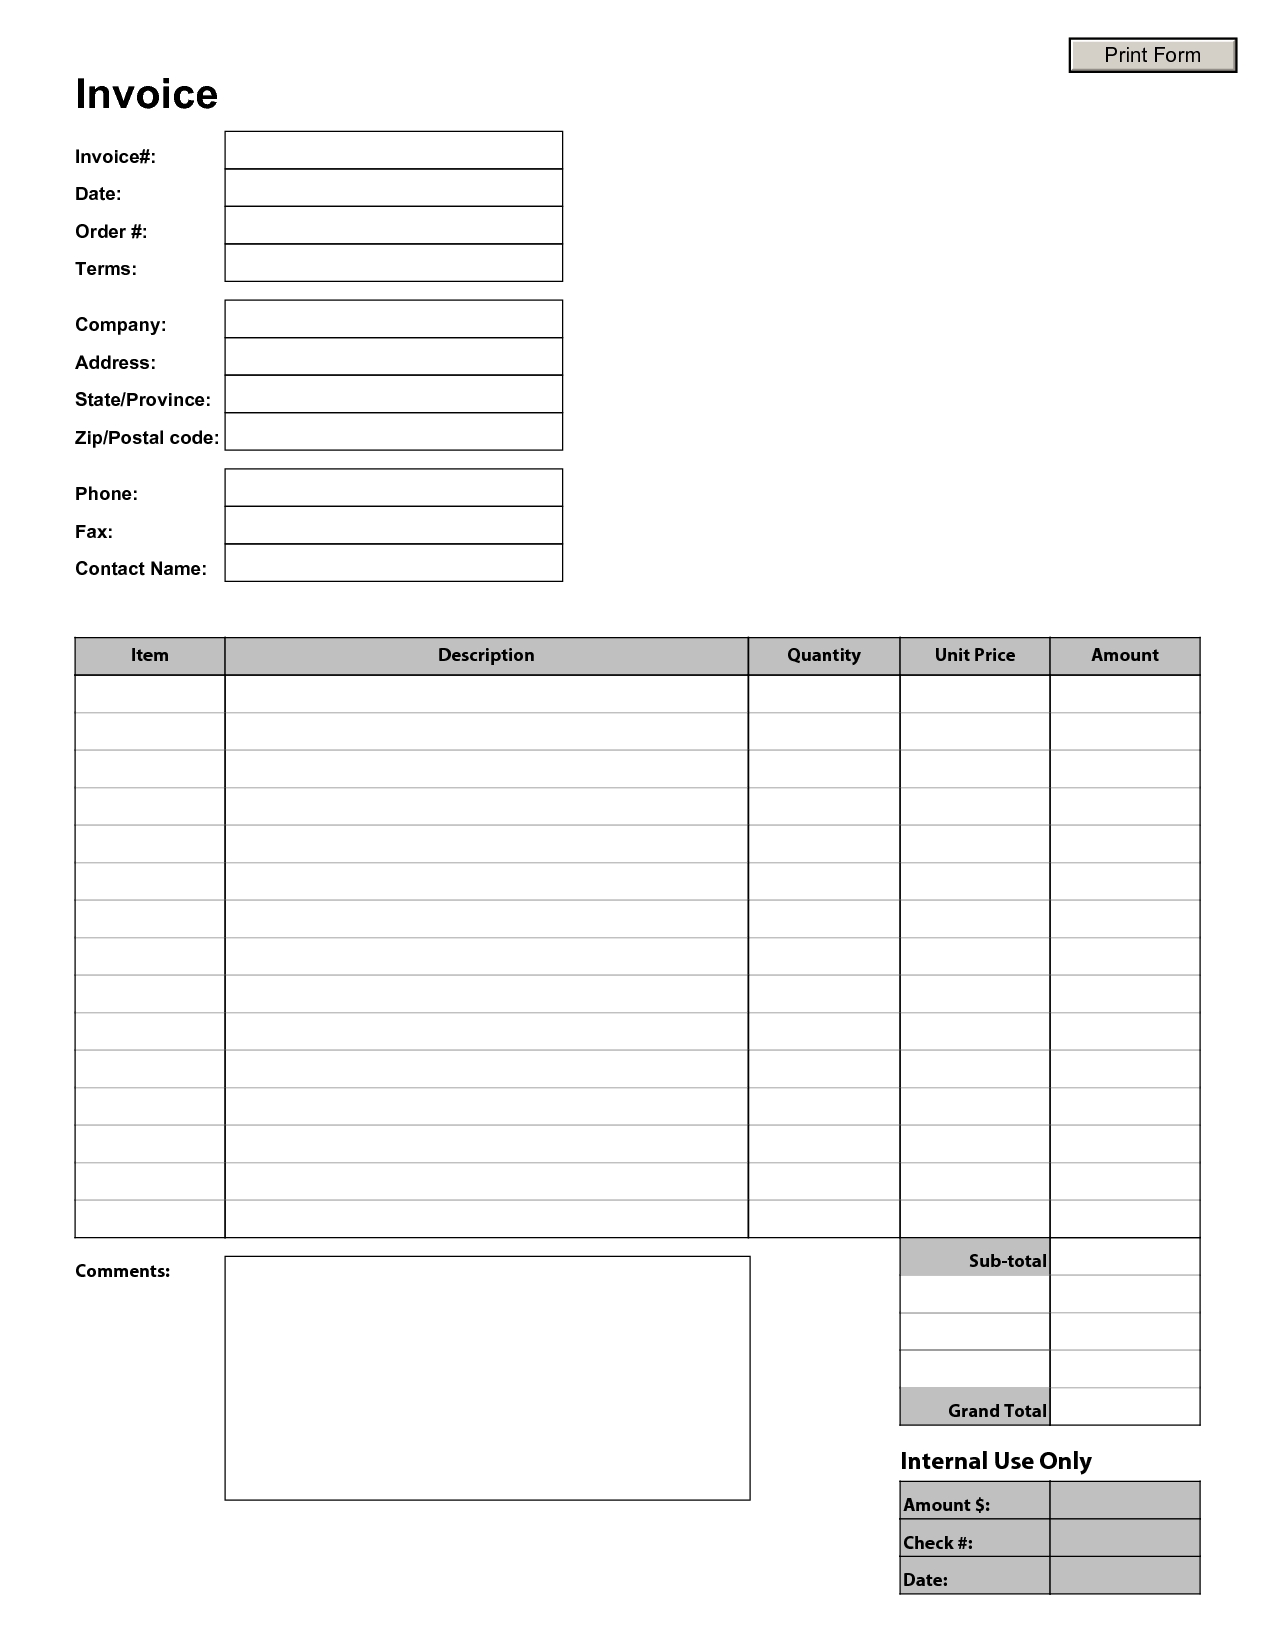 blank invoice template blank invoice printable invoice blank invoice forms to print